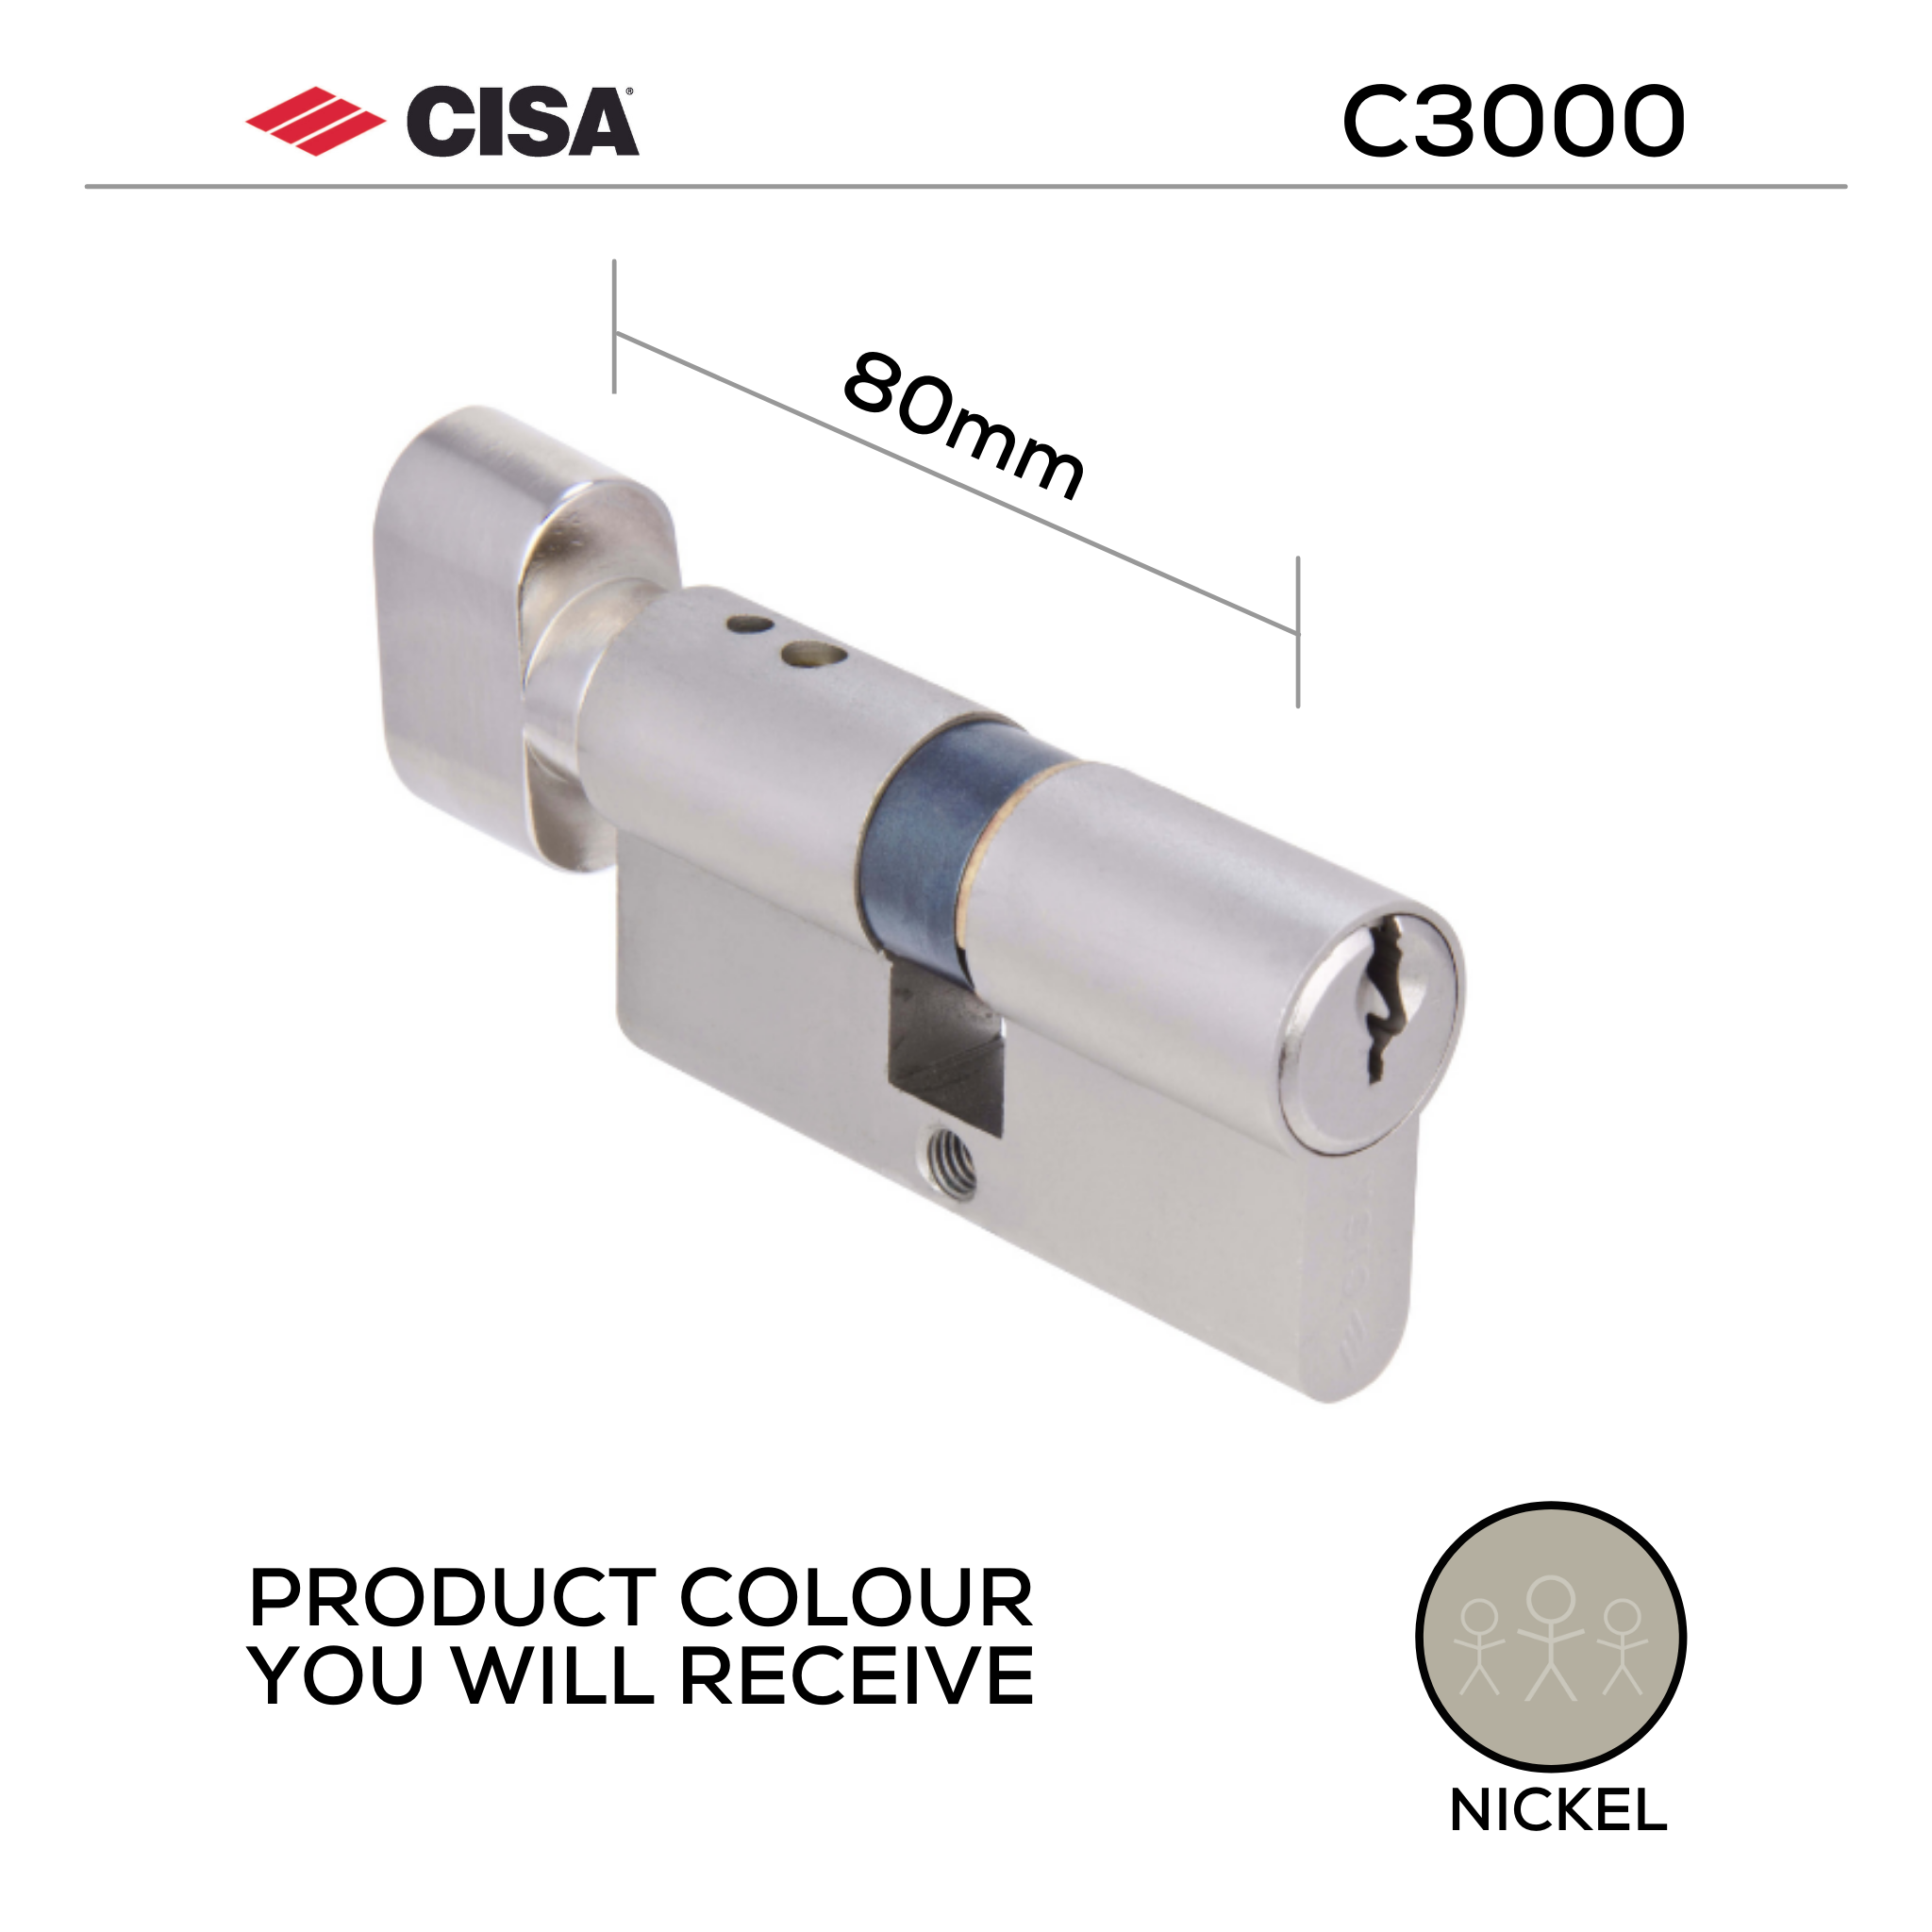 0N317-90-12-KD, 80mm - 49.5/29.5, Double Cylinder, C3000, Thumbturn to Key, Keyed to Differ (Standard), 3 Keys, 6 Pin, Nickel, CISA